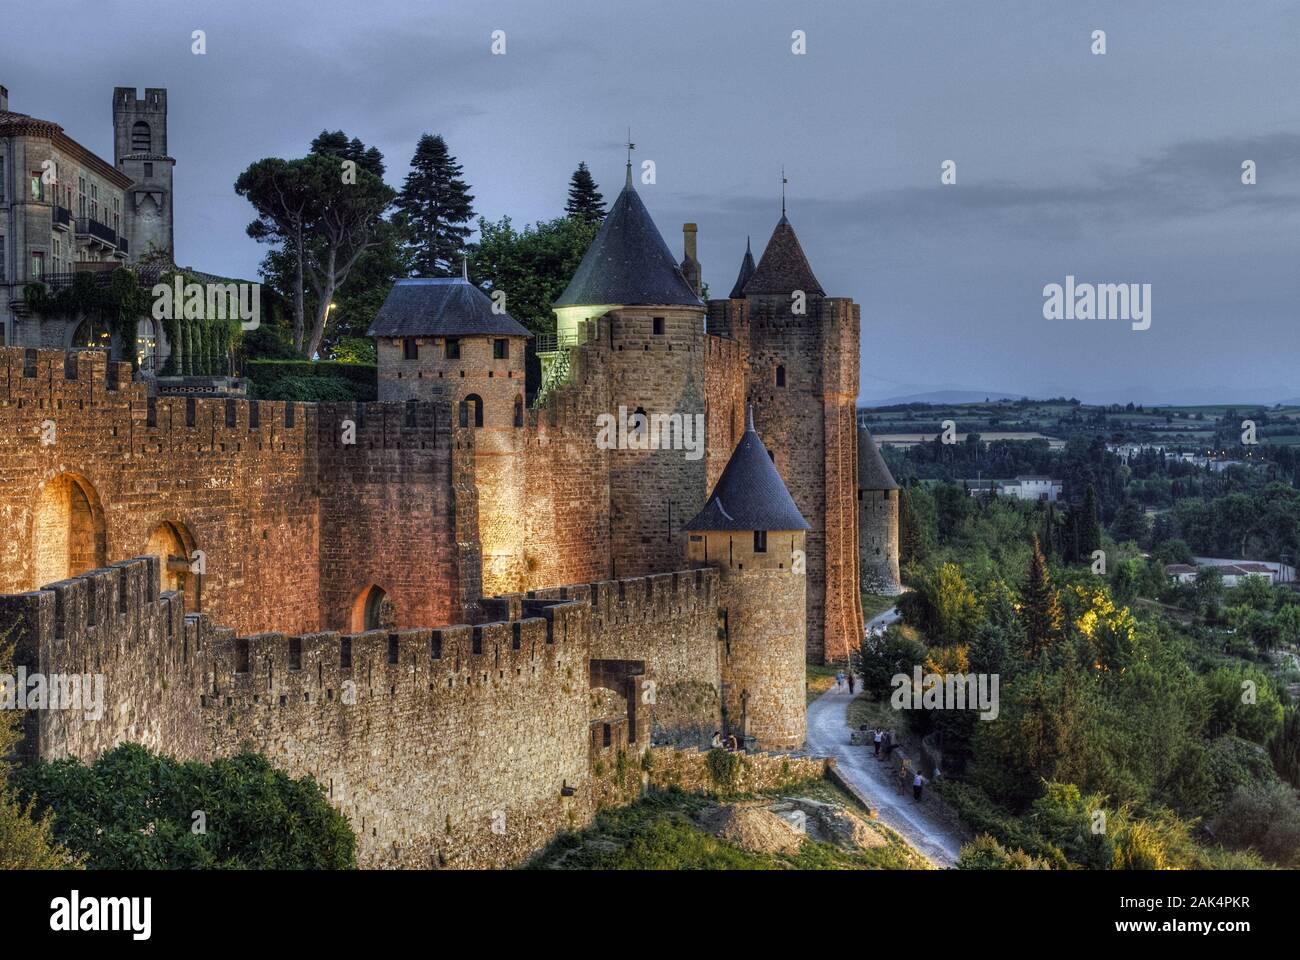 Carcassonne: Europas größte Festungsstadt - [GEO]